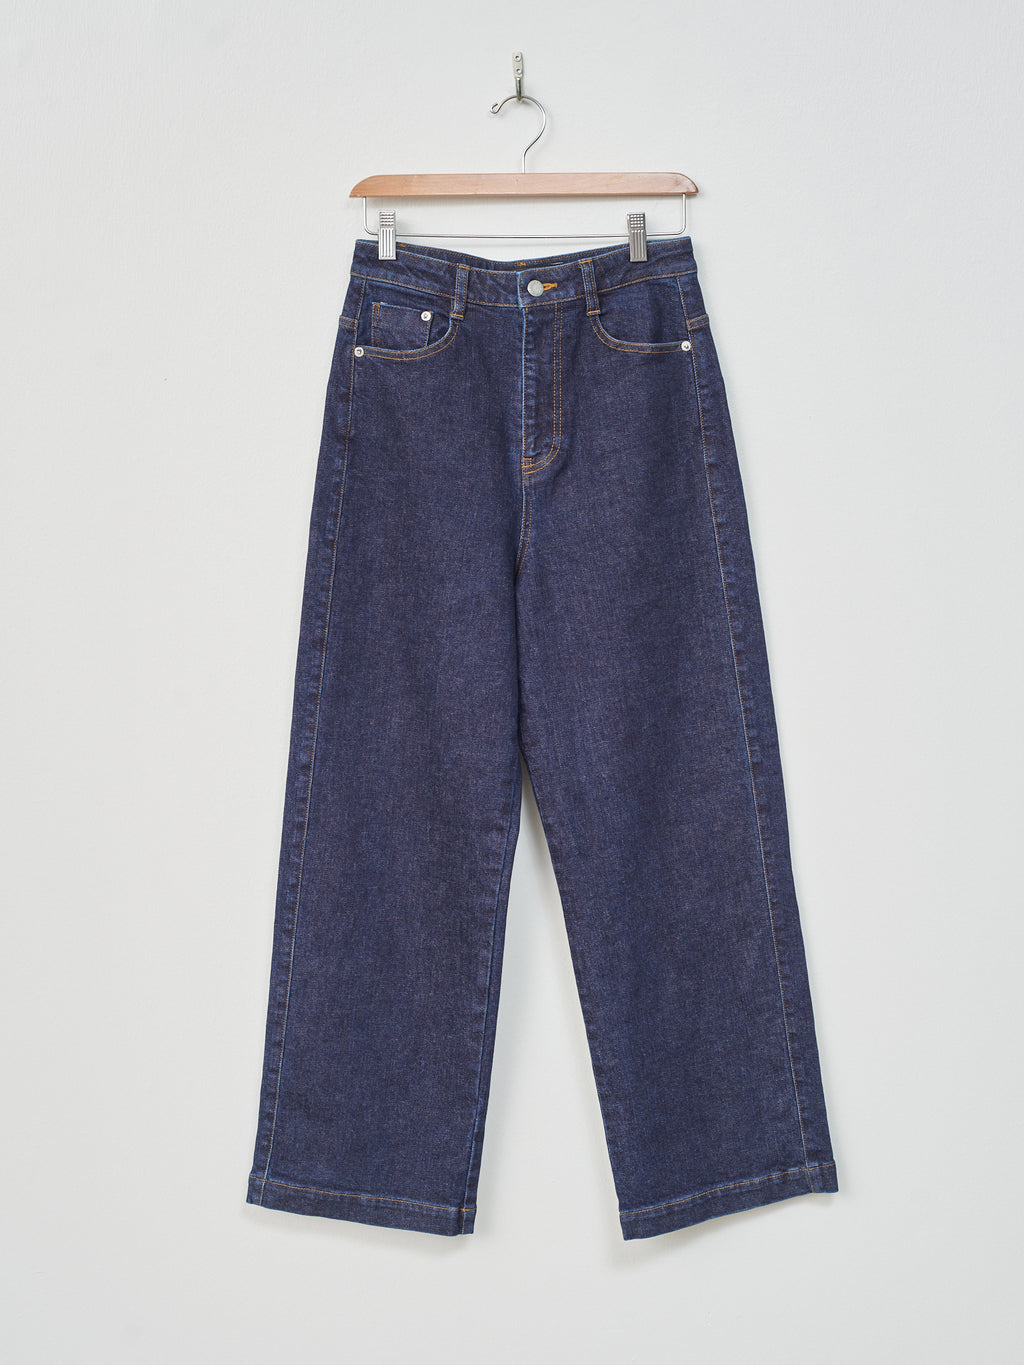 Namu Shop - Nicholson & Nicholson SOPHIA Jeans - Blue